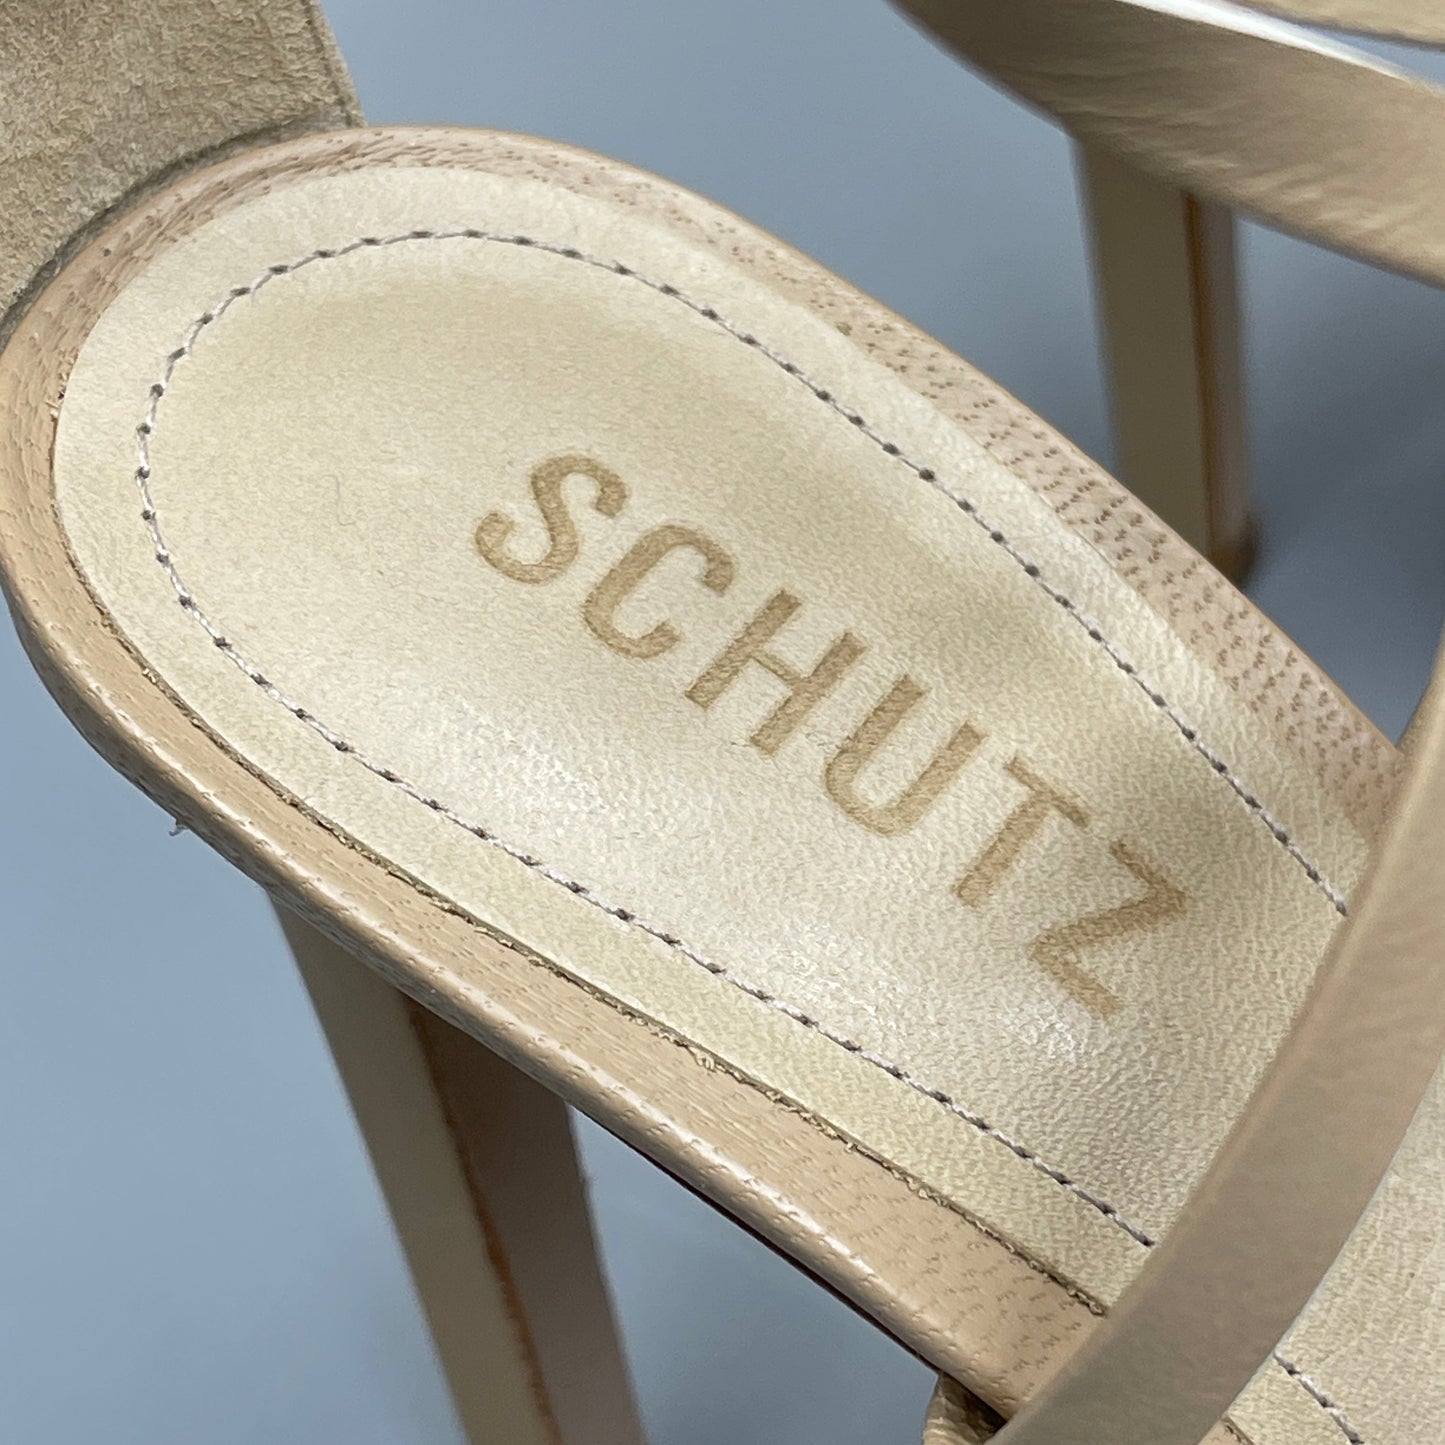 SCHUTZ Bryce Ankle Tie Women's Leather High Heel Strappy Sandal Light Nude Sz 6B (New)